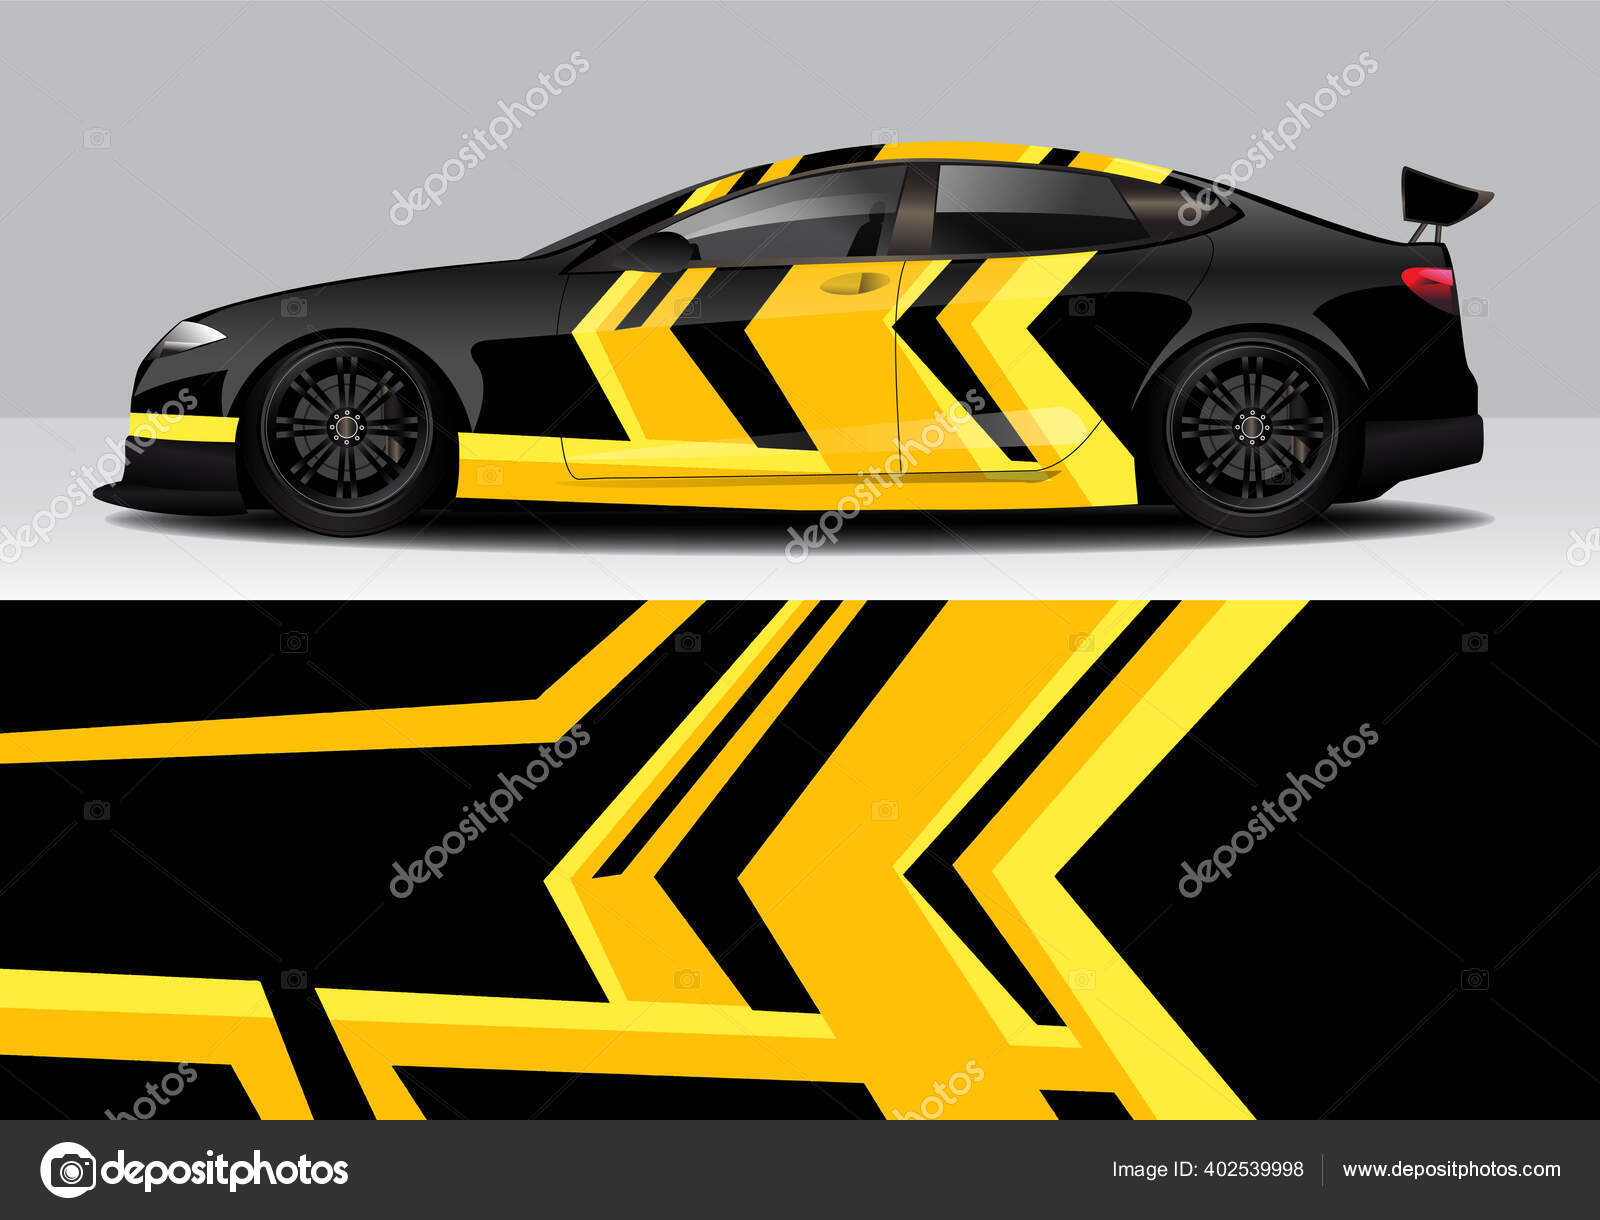 https://st4.depositphotos.com/29413164/40253/v/1600/depositphotos_402539998-stock-illustration-modern-sporty-abstract-car-wrap.jpg